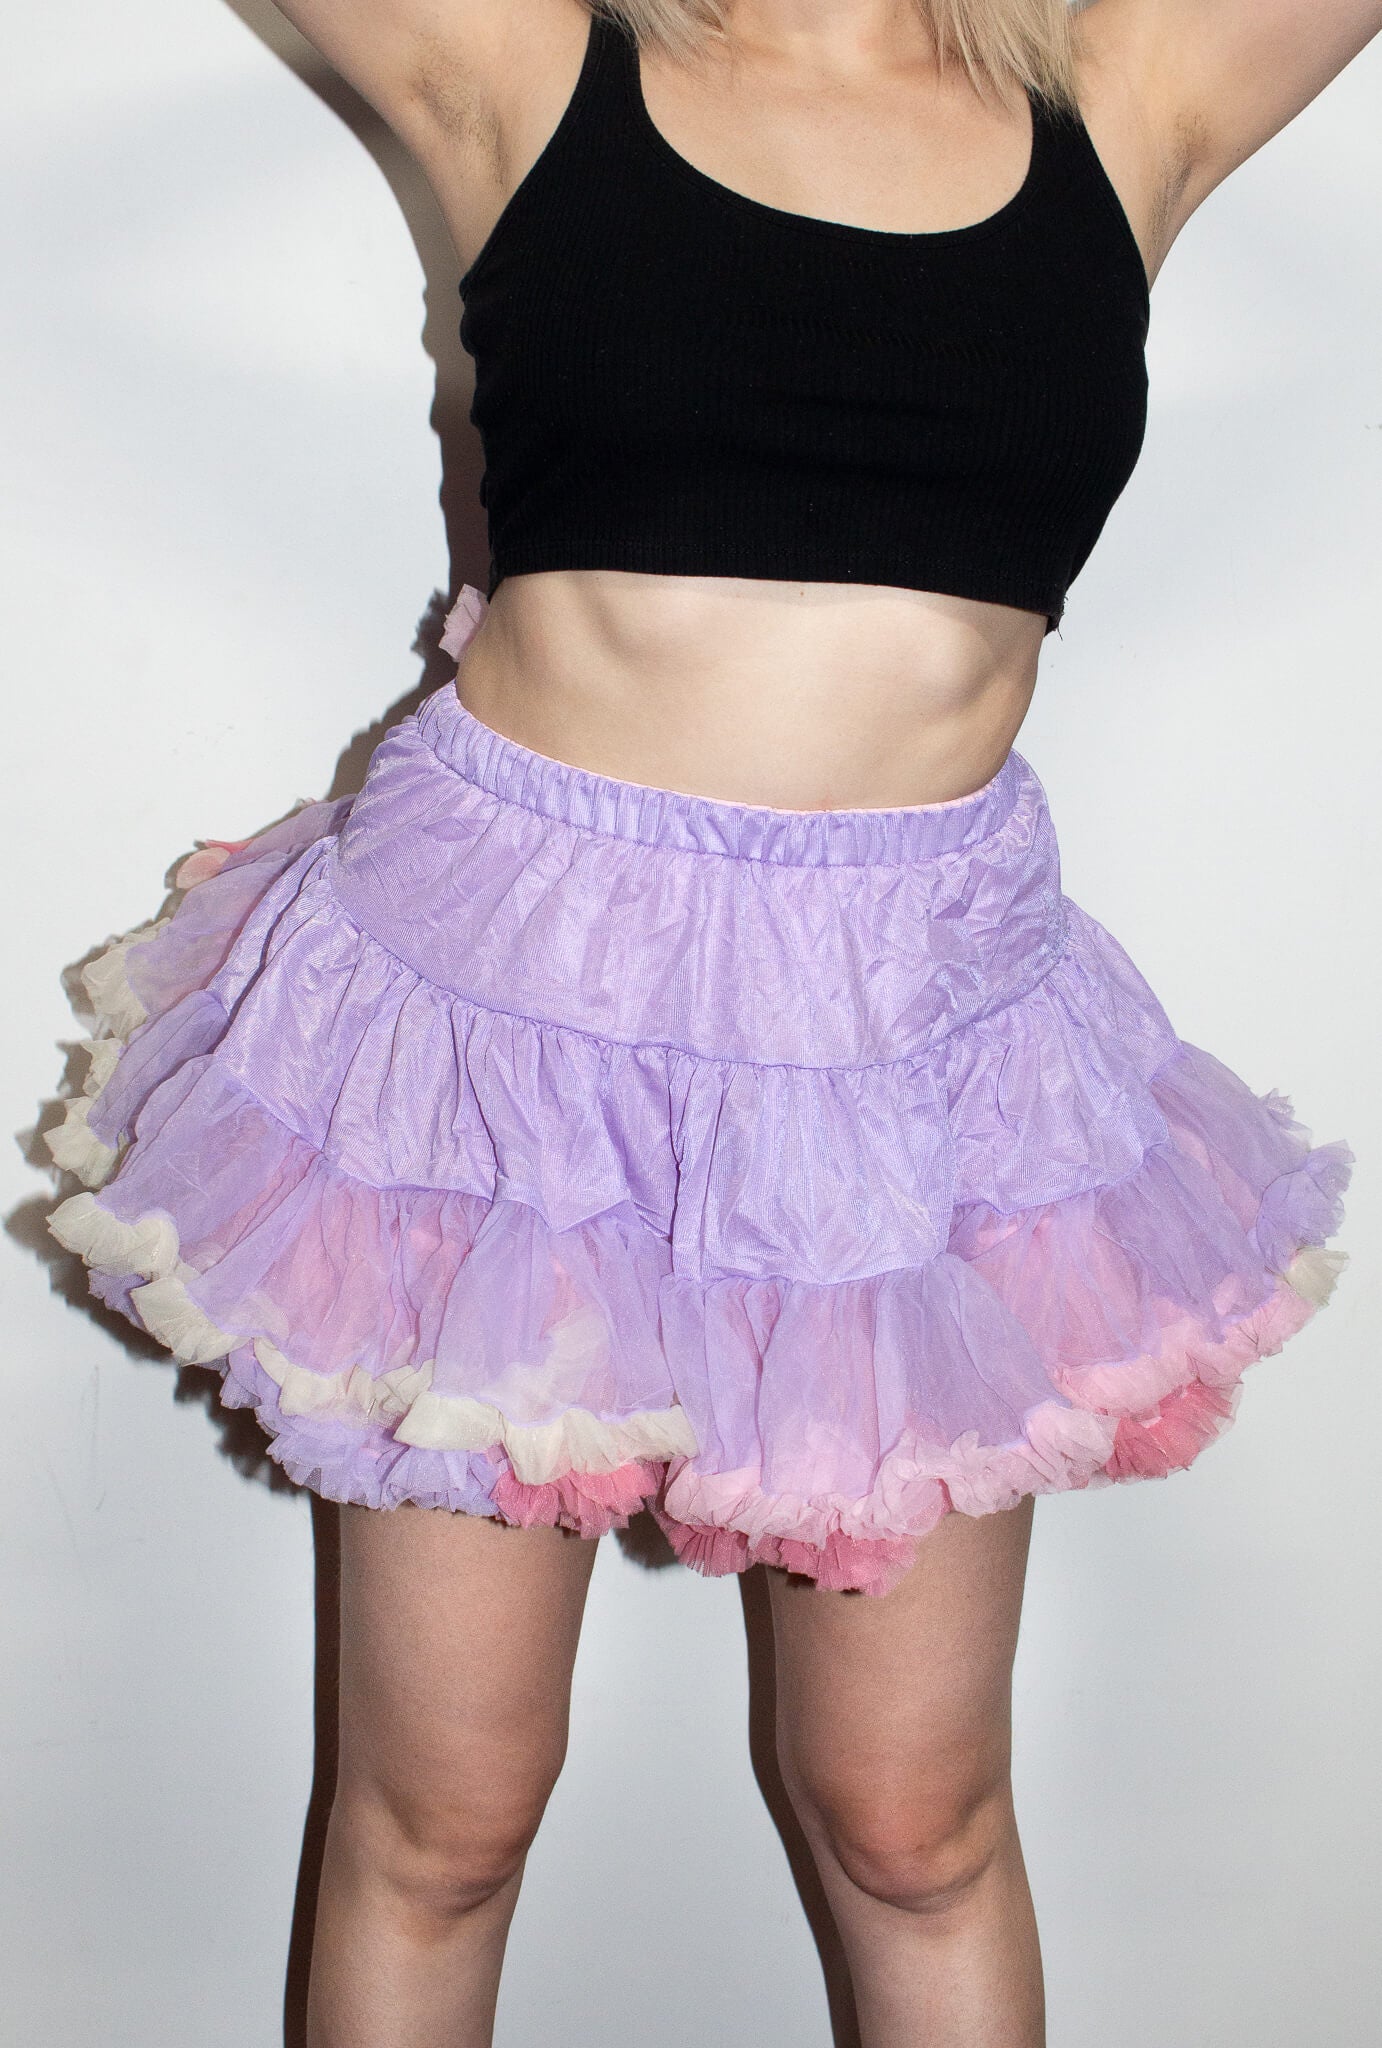 Deluxe Purple Pink & White Petticoat